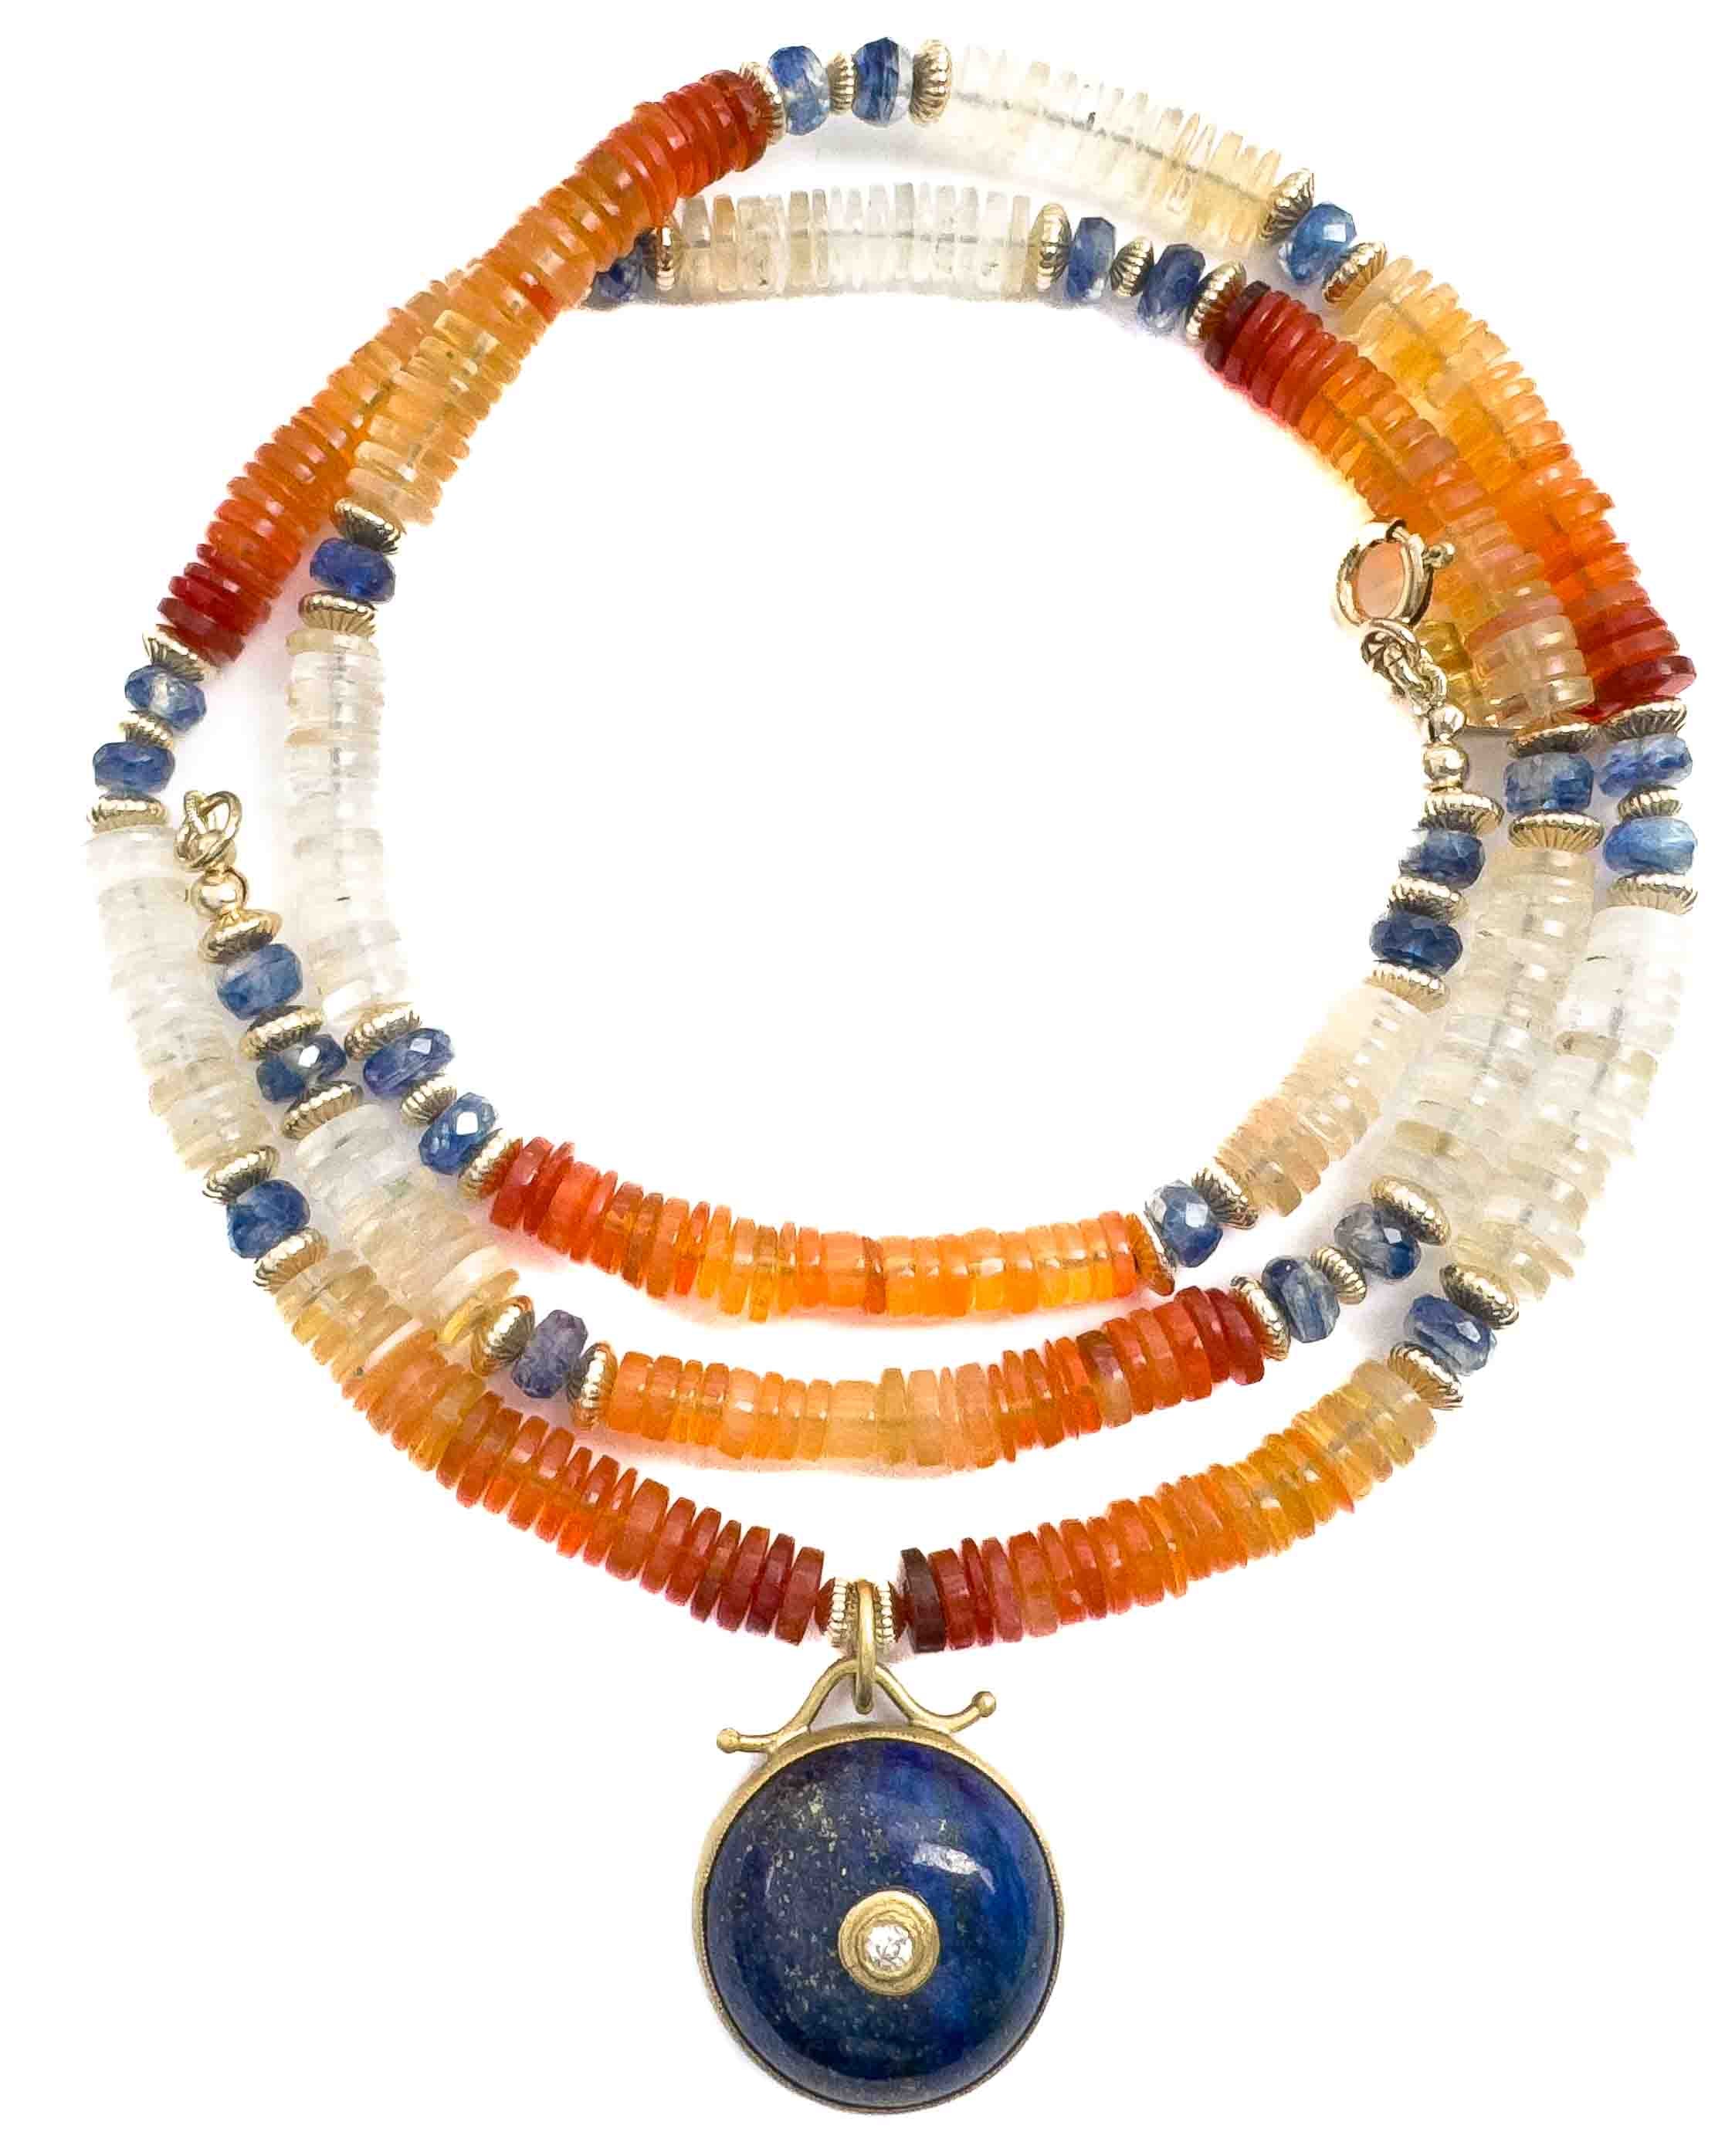 Diamond & Lapis Lazuli Pendant on Mexican Fire Opal & Kyanite Necklace